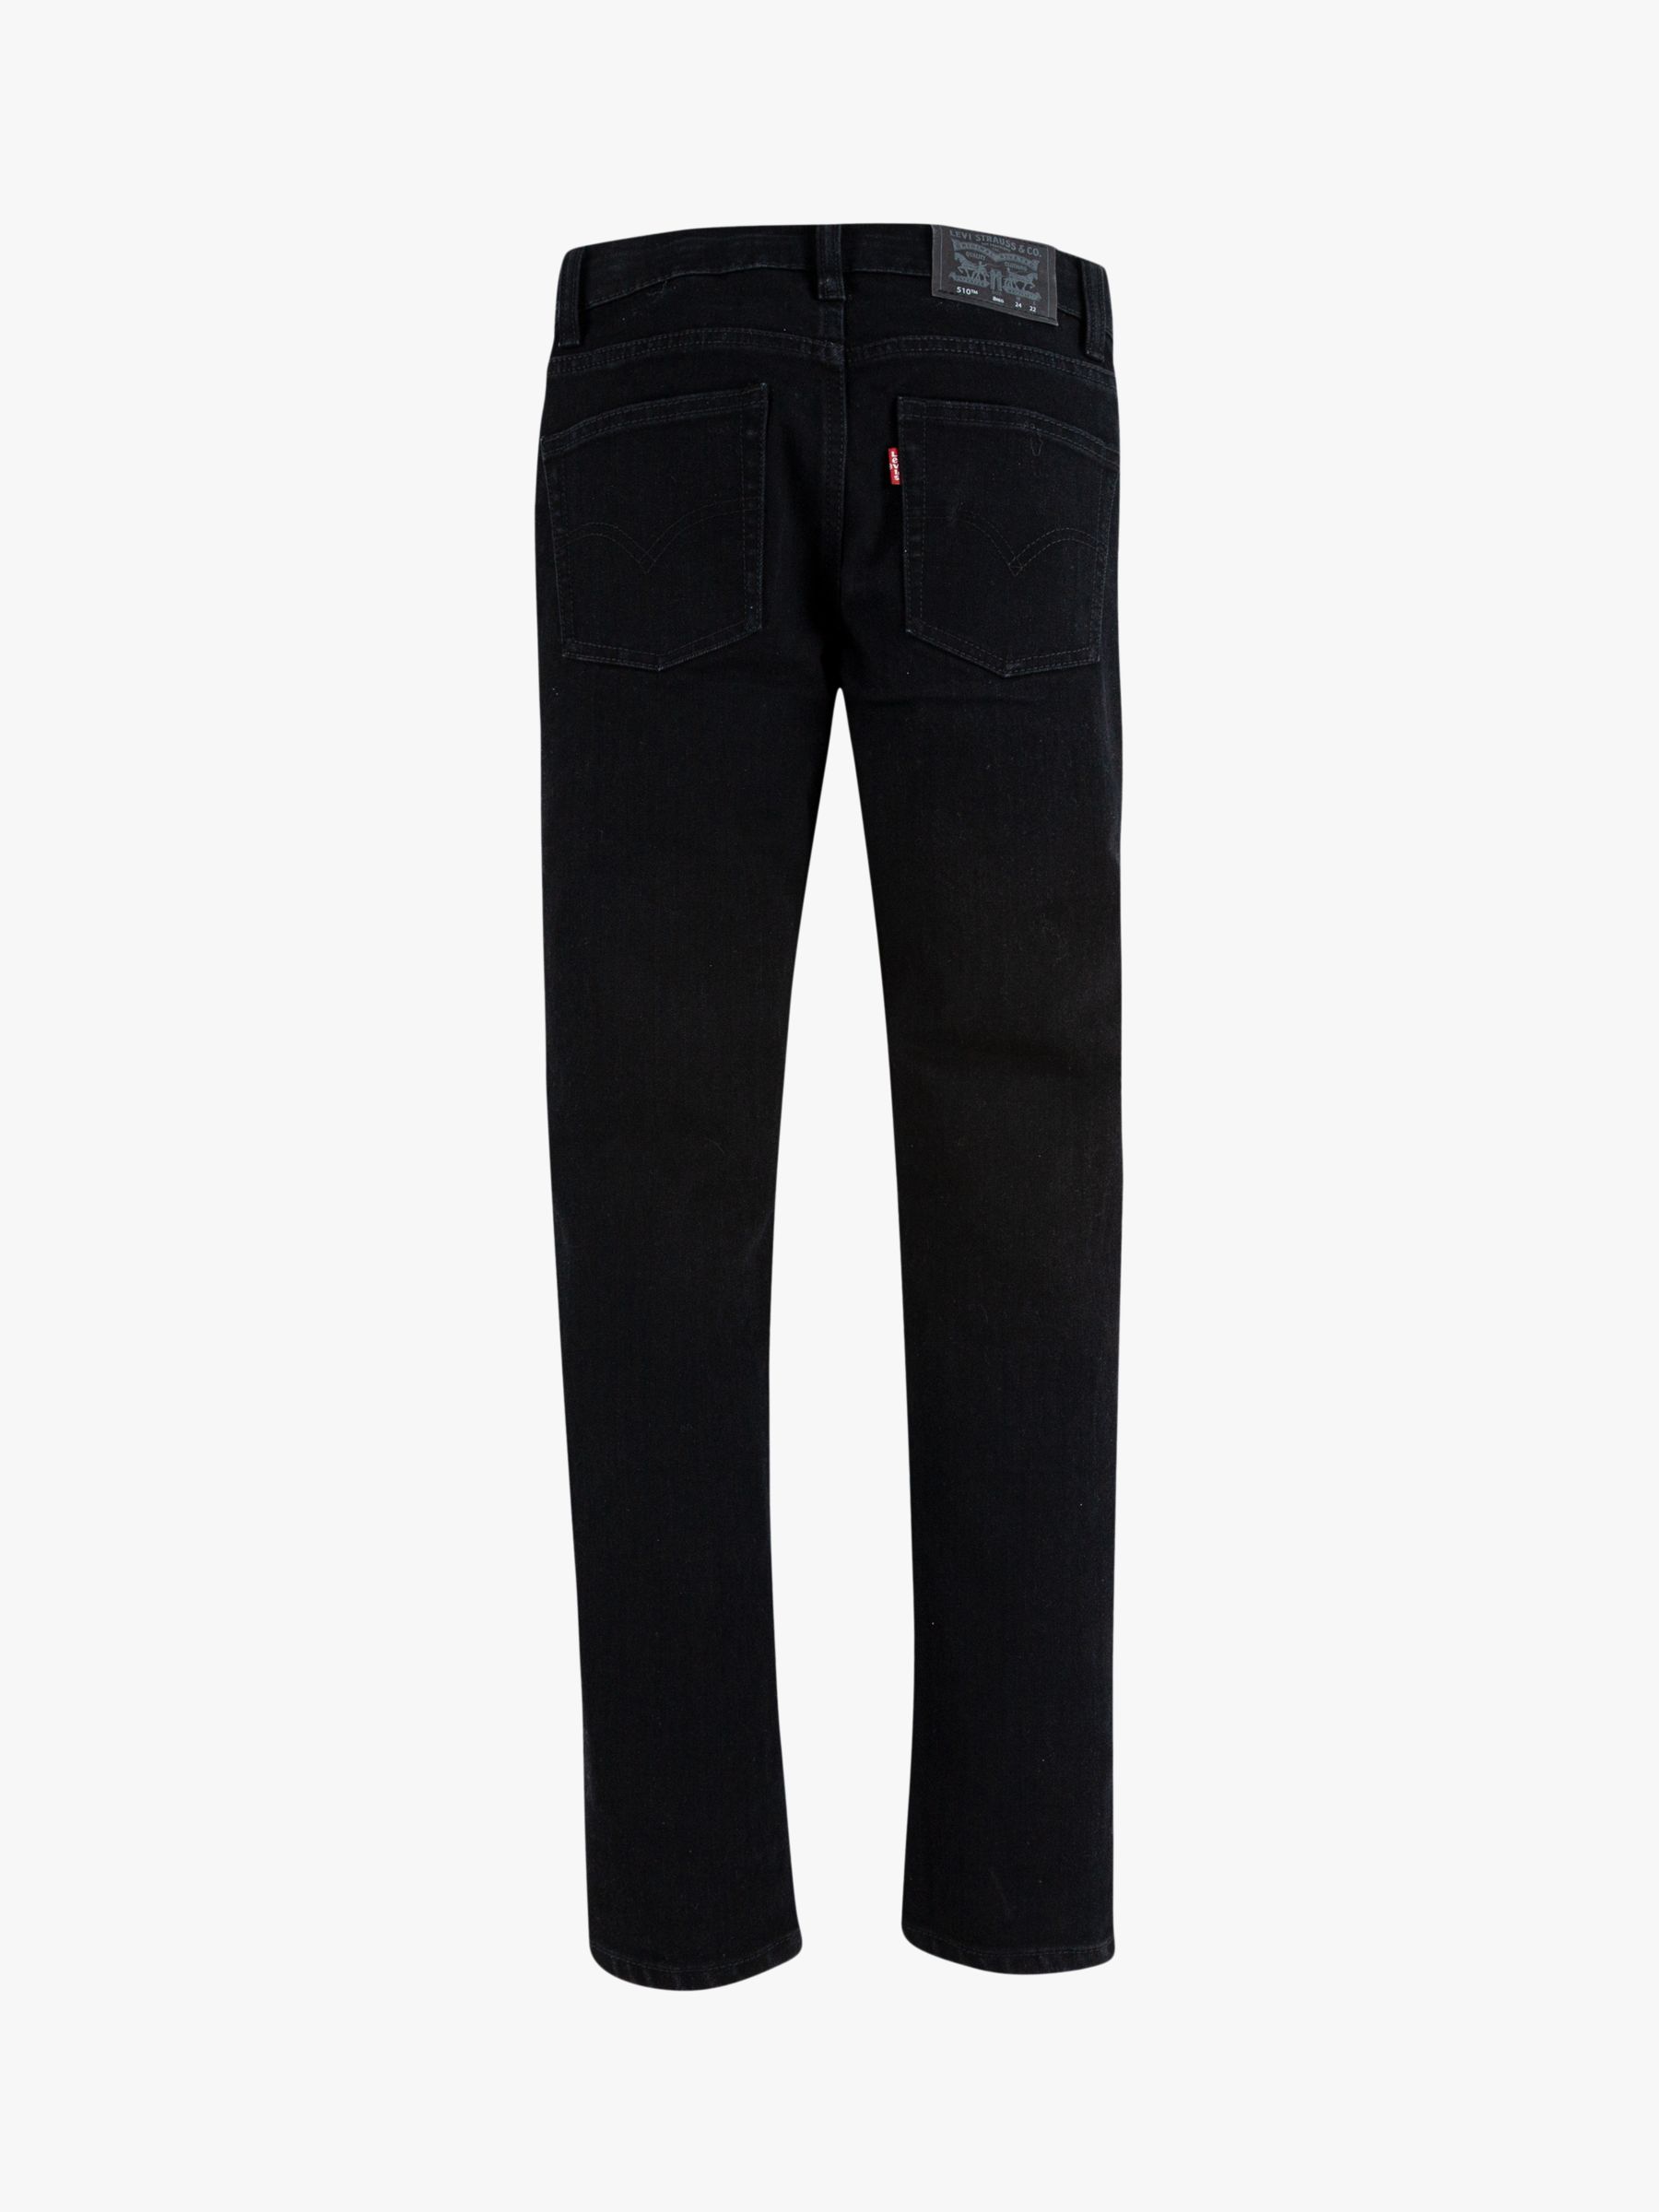 Levi Boys' 510 Skinny Fit Jeans, Black Stretch at John Lewis & Partners